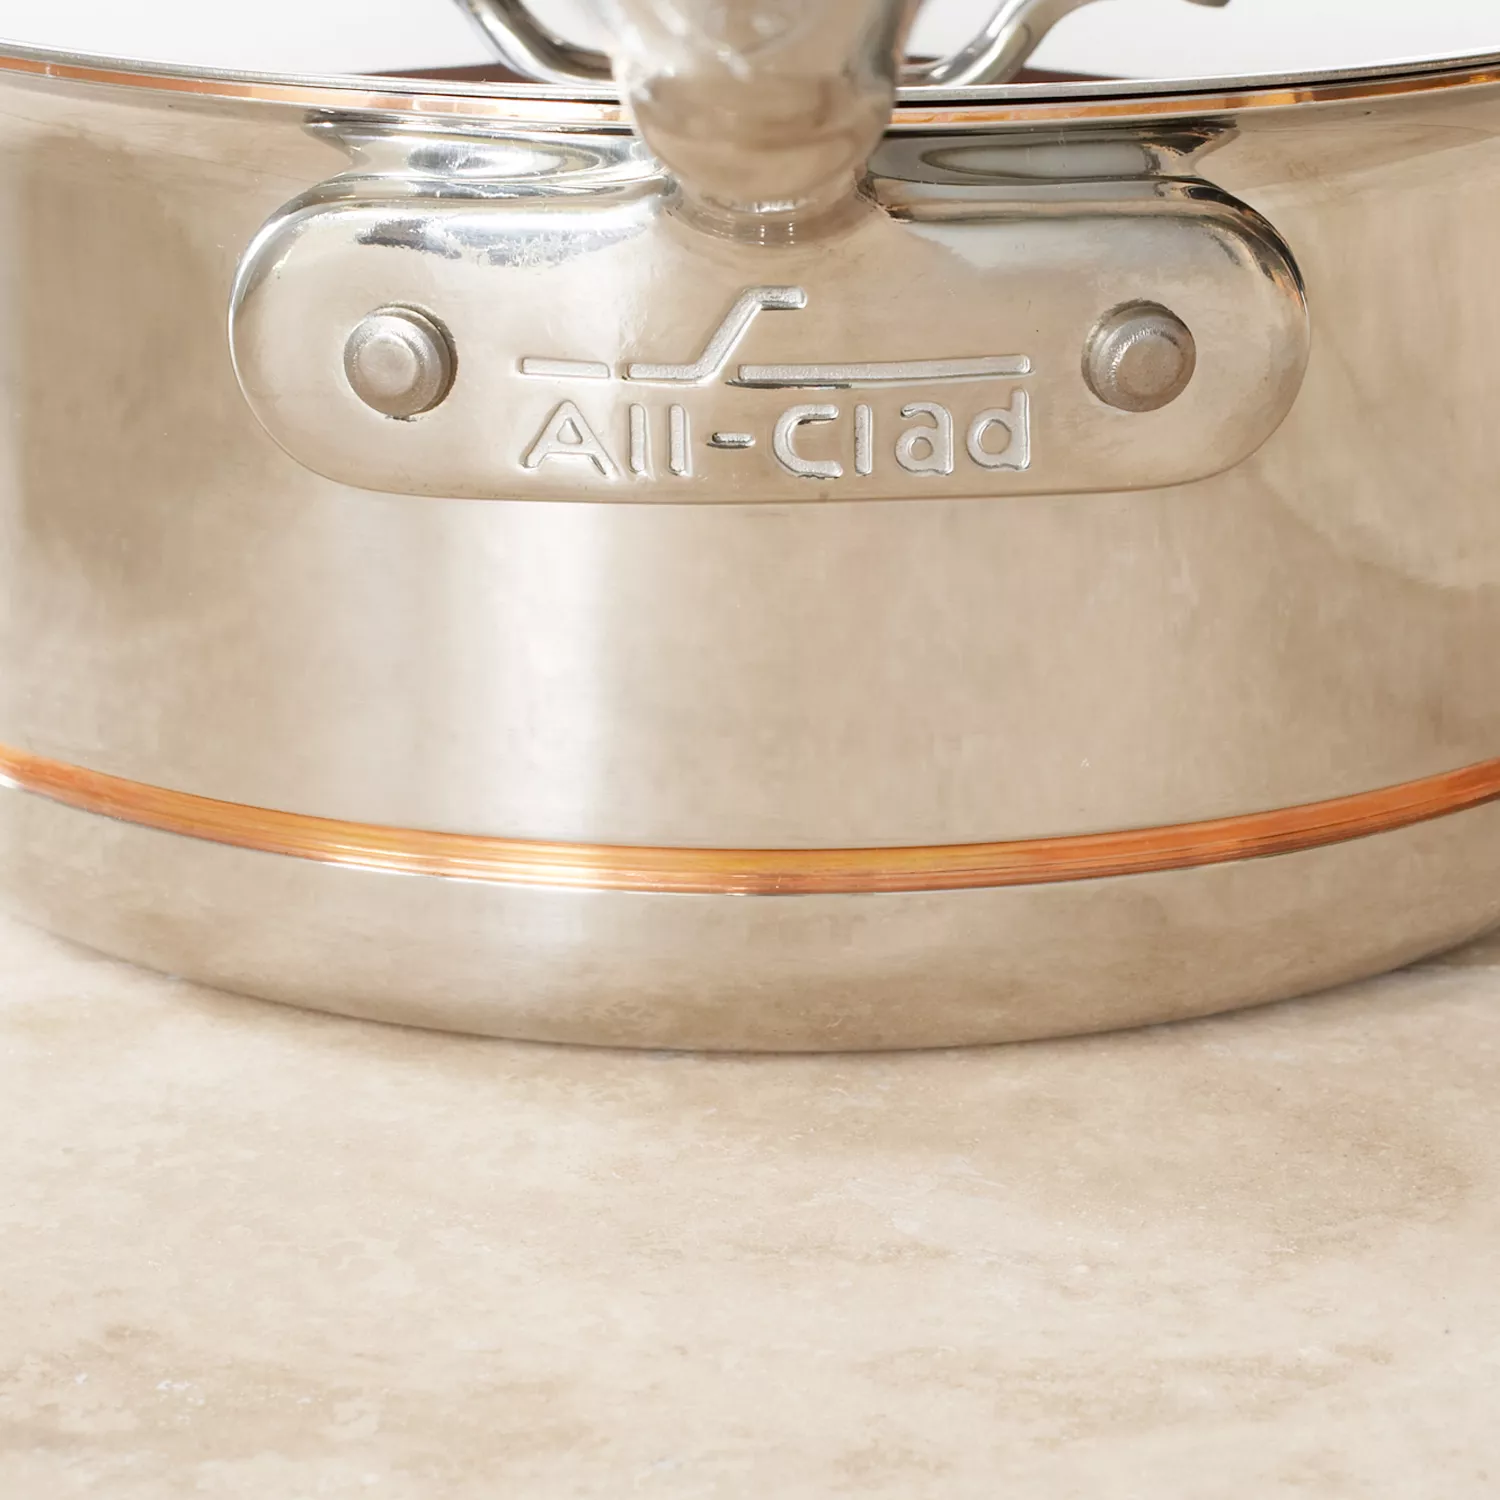 All-Clad Copper Core 15-Piece Cookware Set